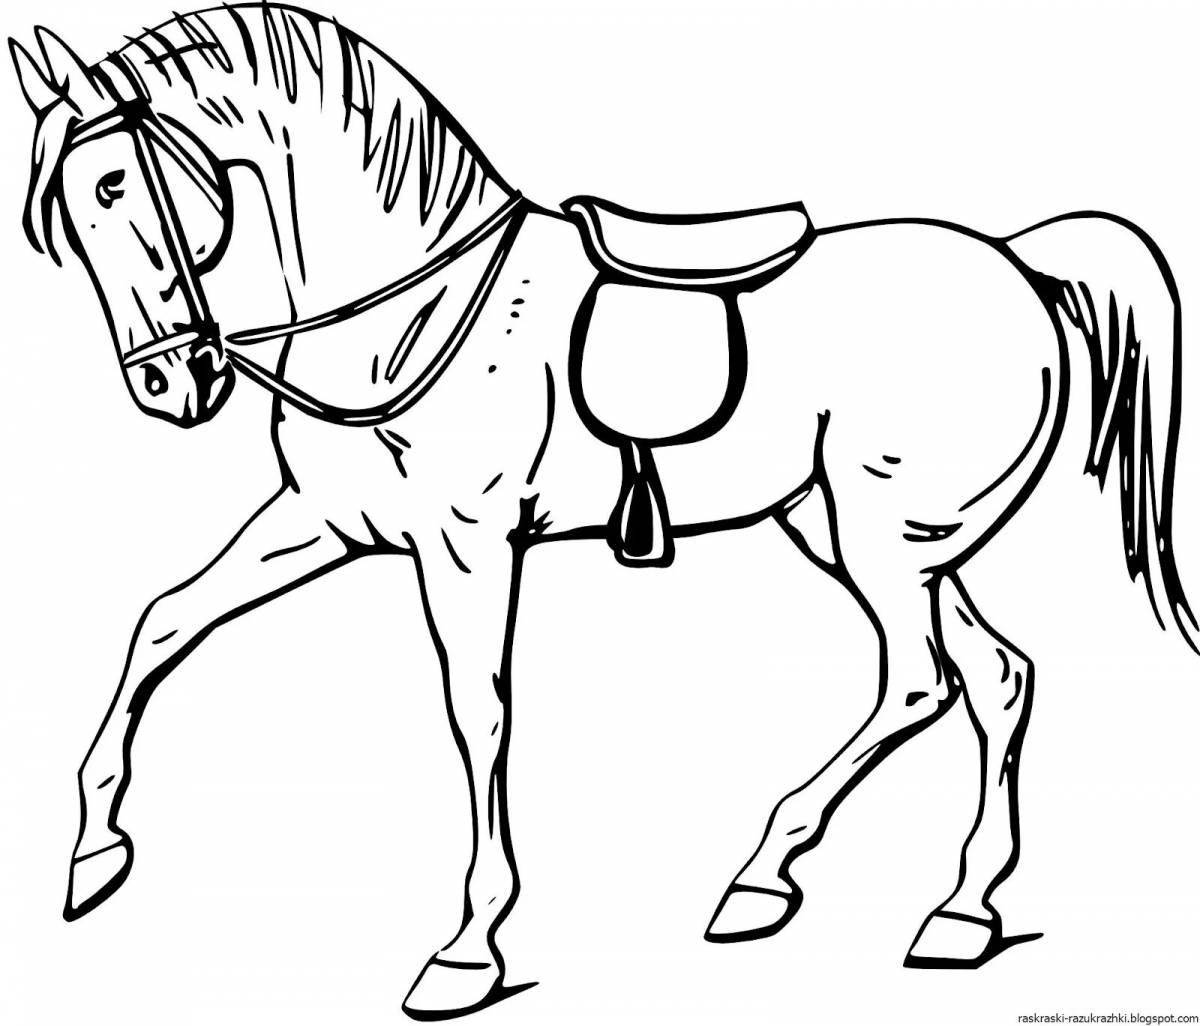 Coloring energetic quarterhorse horse for kids